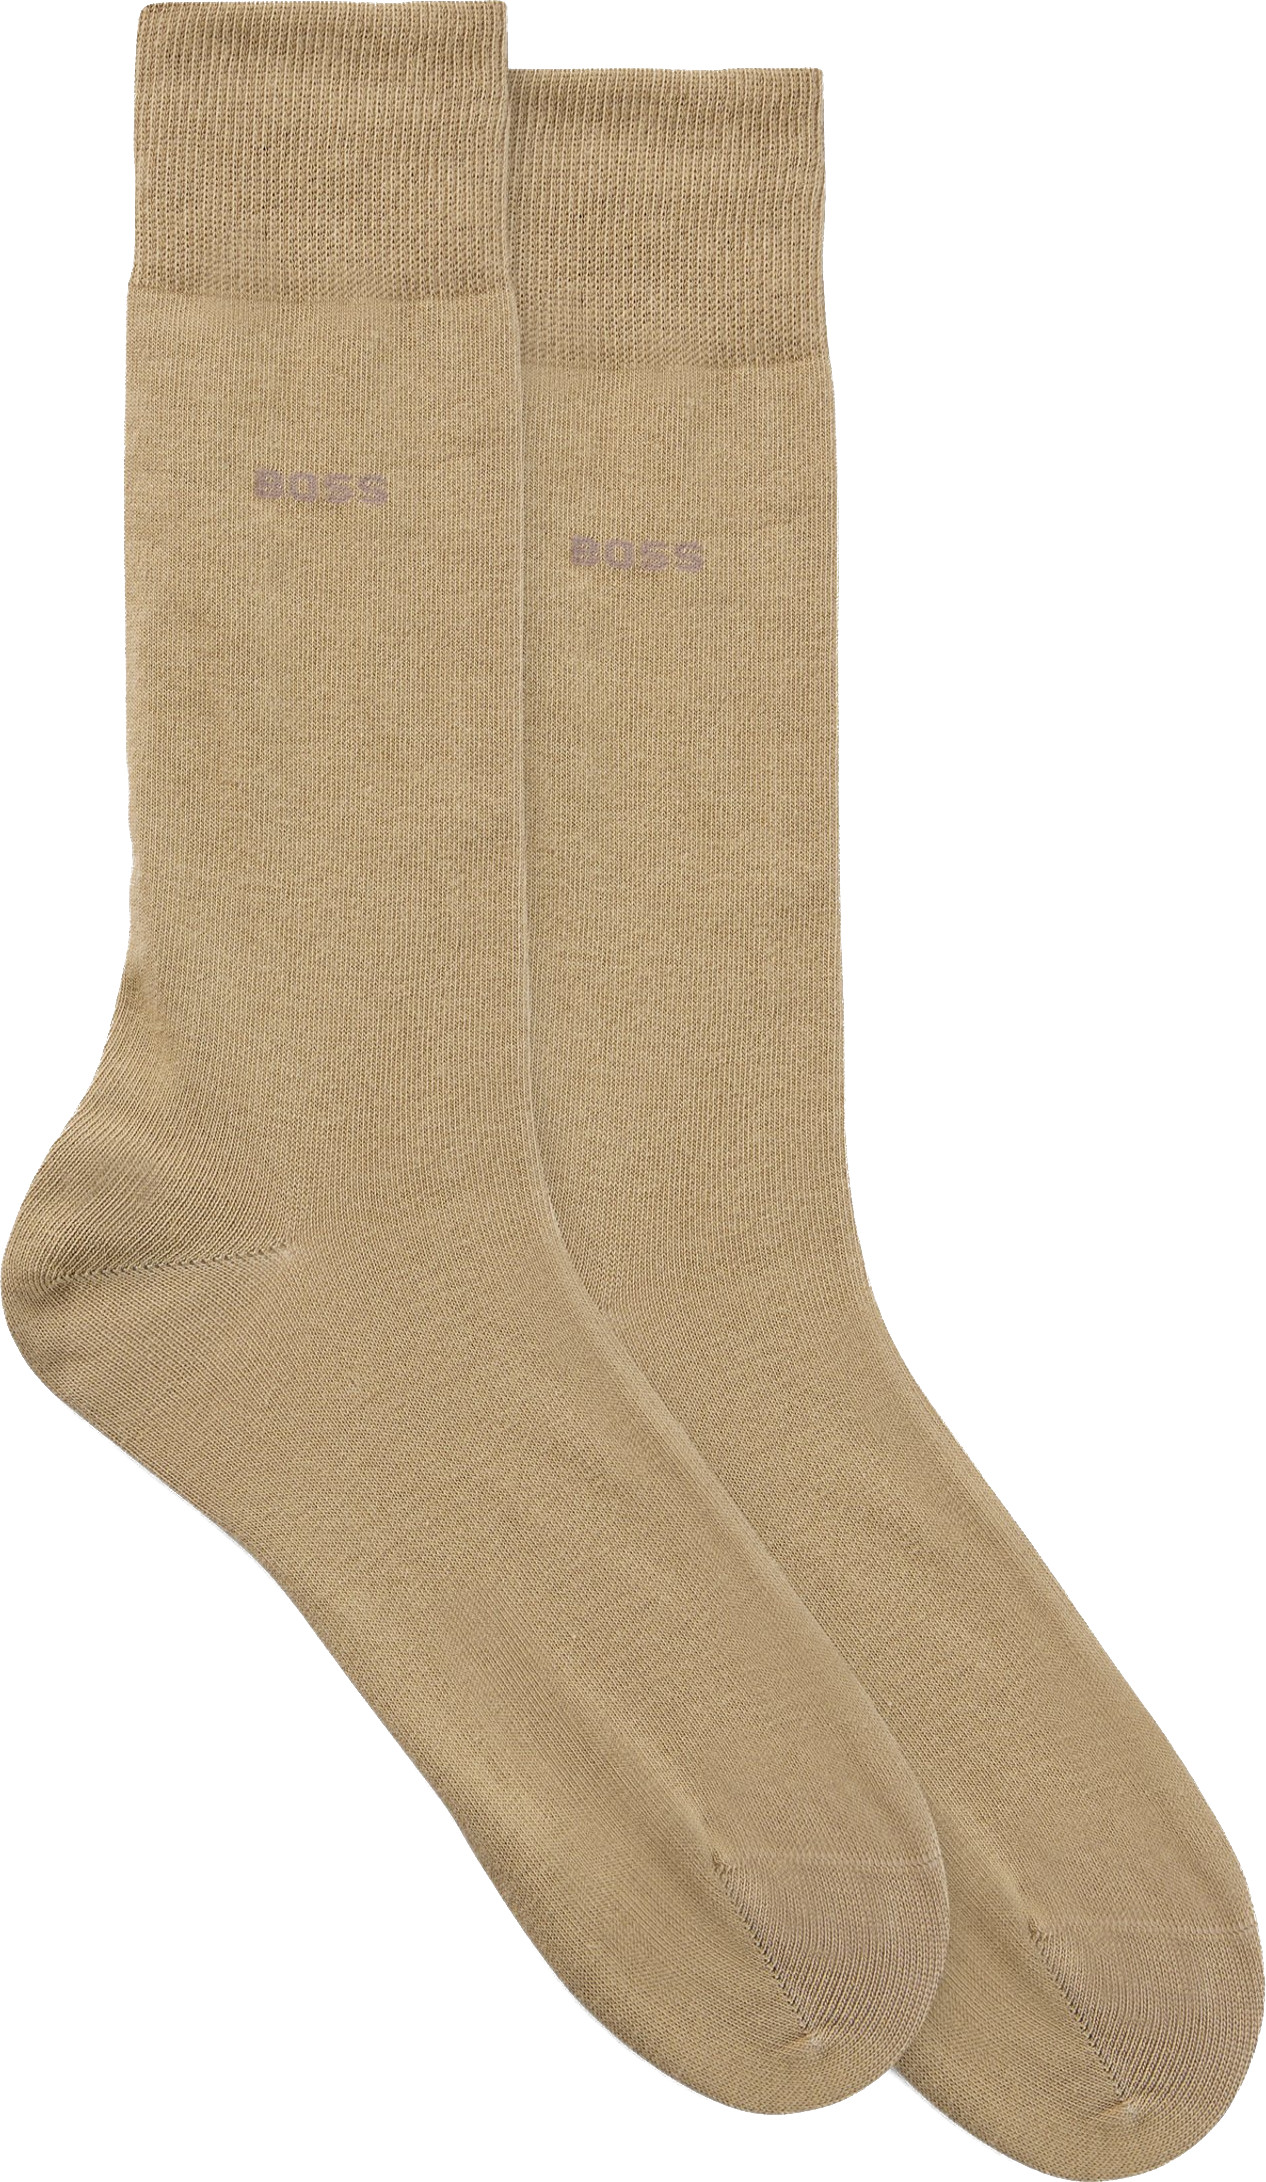 Hugo Boss 2 PACK - pánske ponožky BOSS 50516616-261 39-42